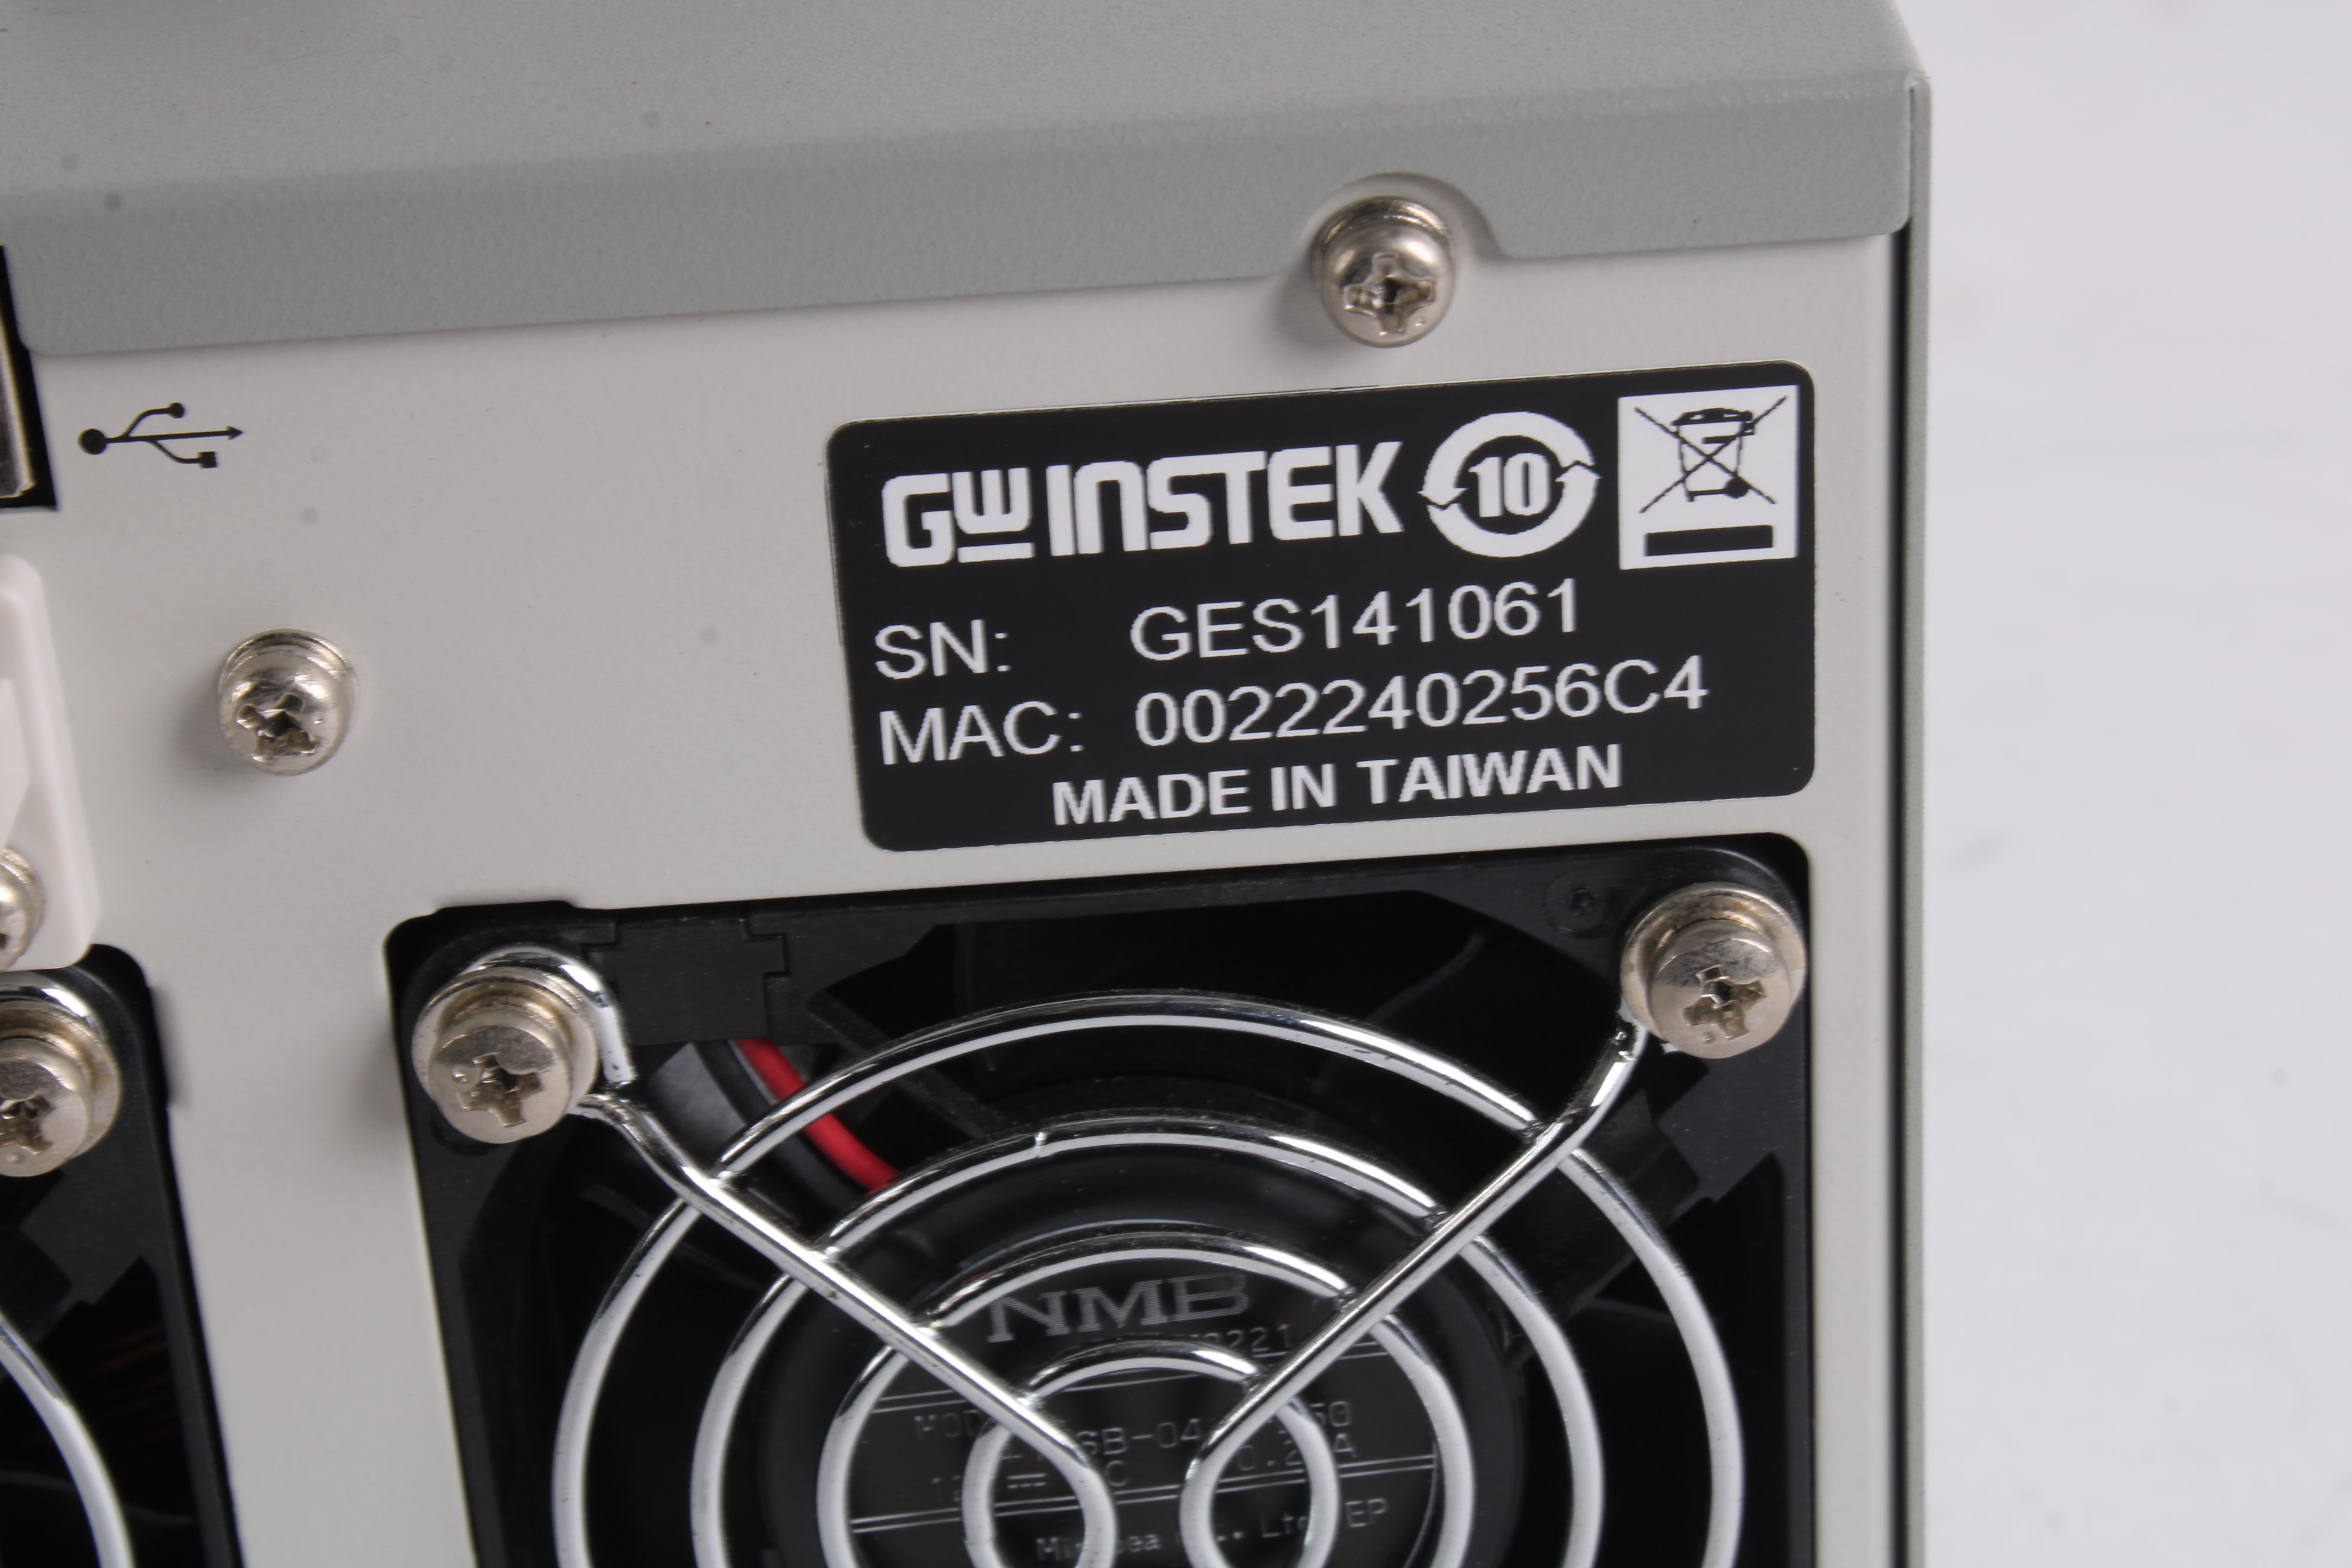 GW Instek PSW 80-27 Multi-Range DC Power Supply Single Output Programmable AS IS